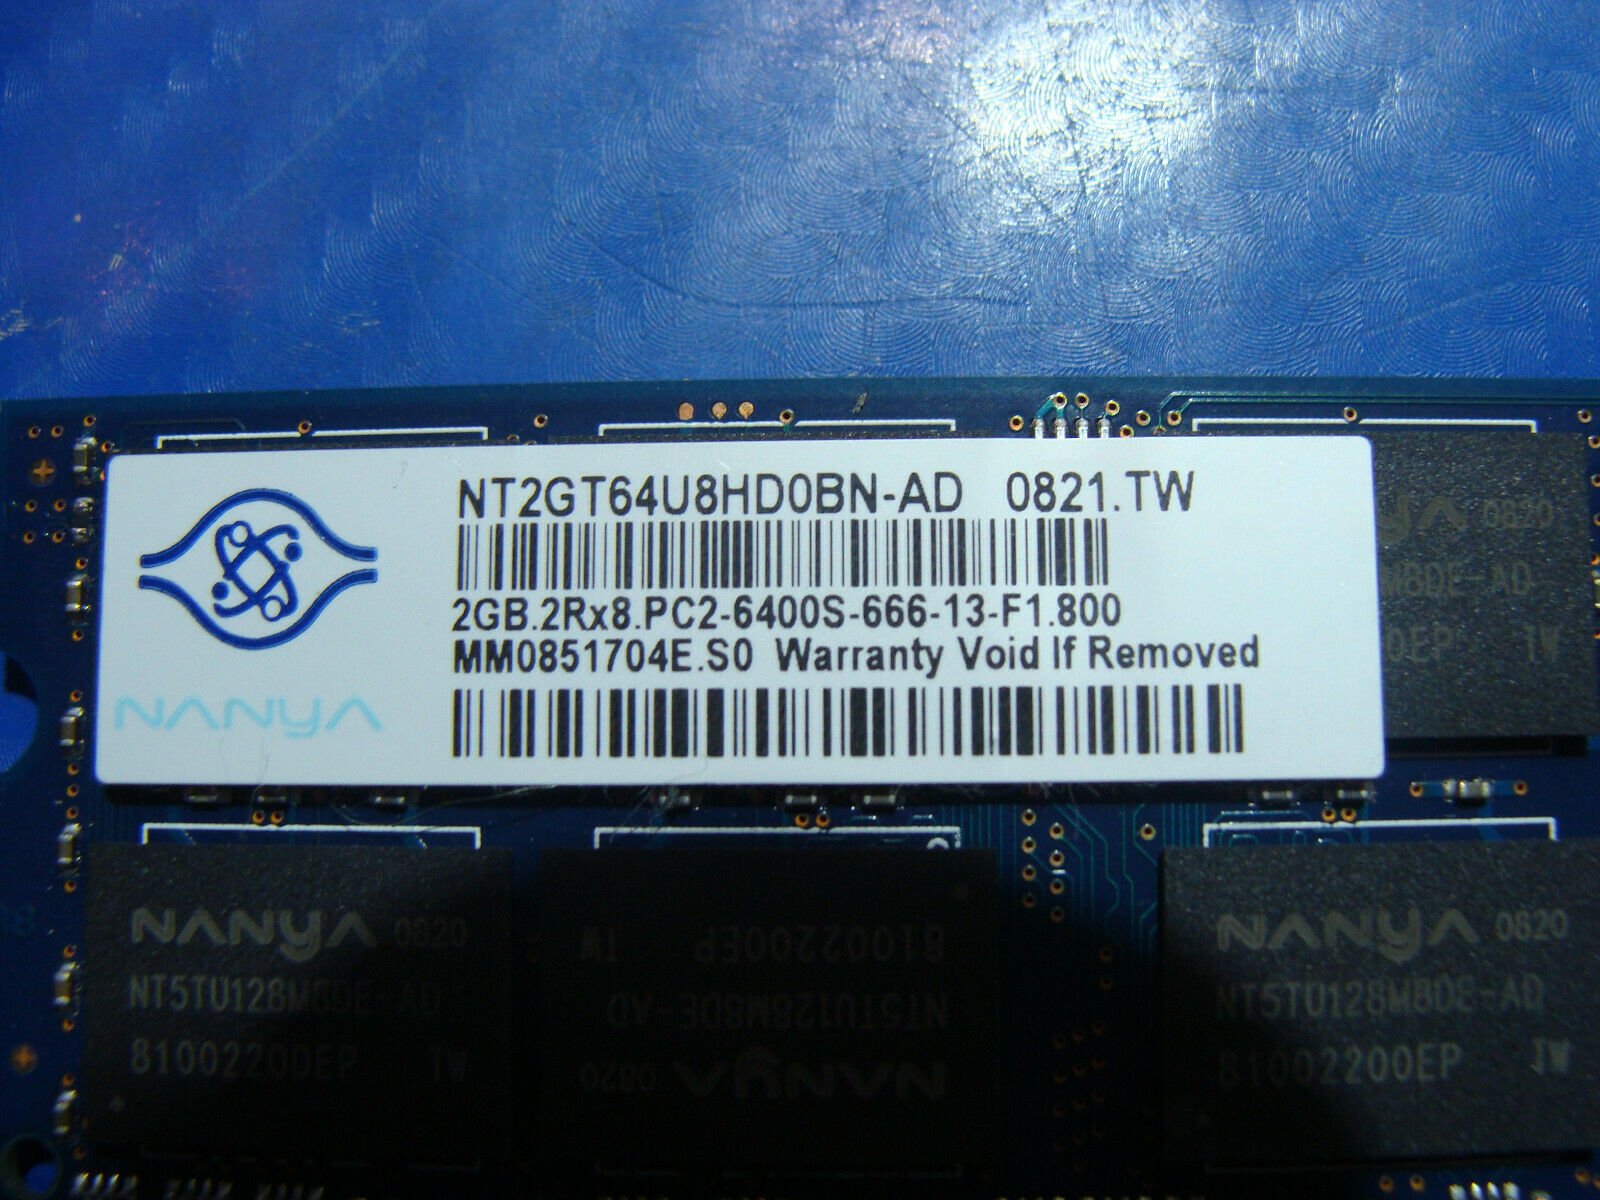 Asus G72GX Nanya Laptop 2GB 2Rx8 Memory PC2-6400S-666-13-F1 NT2GT64U8HD0BN-AD #1 Nanya